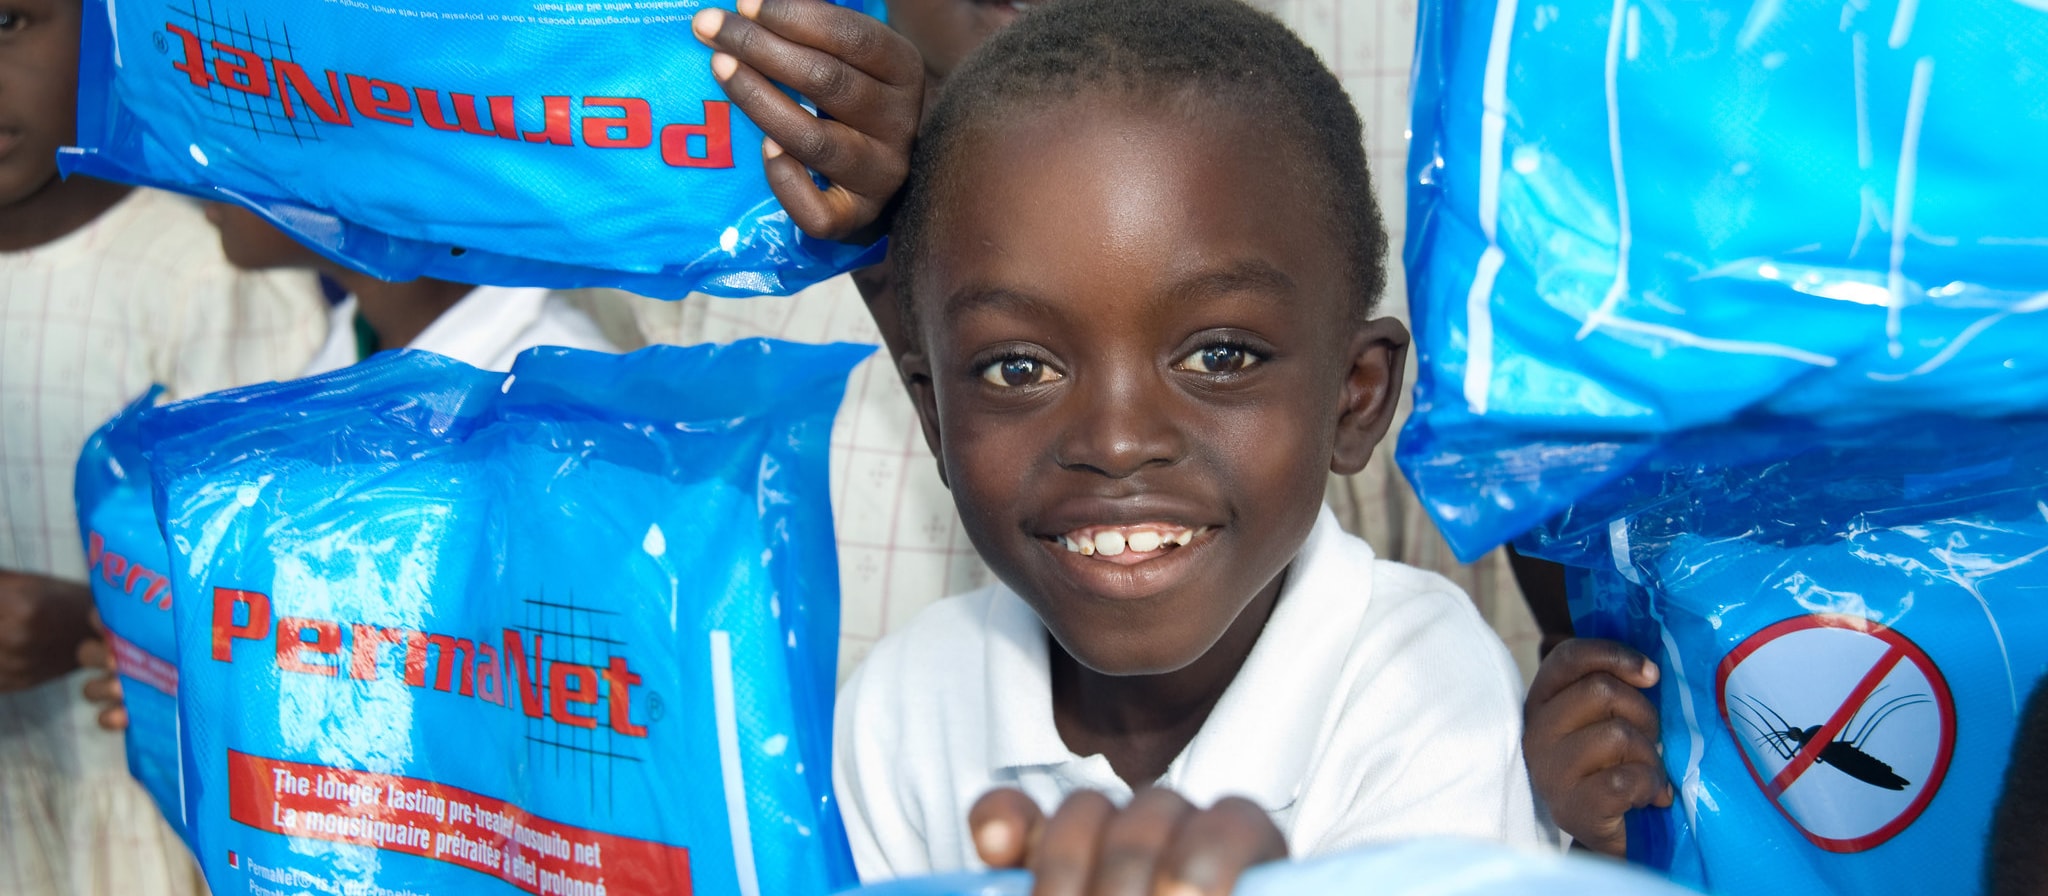 Kenya banner image with smiling child